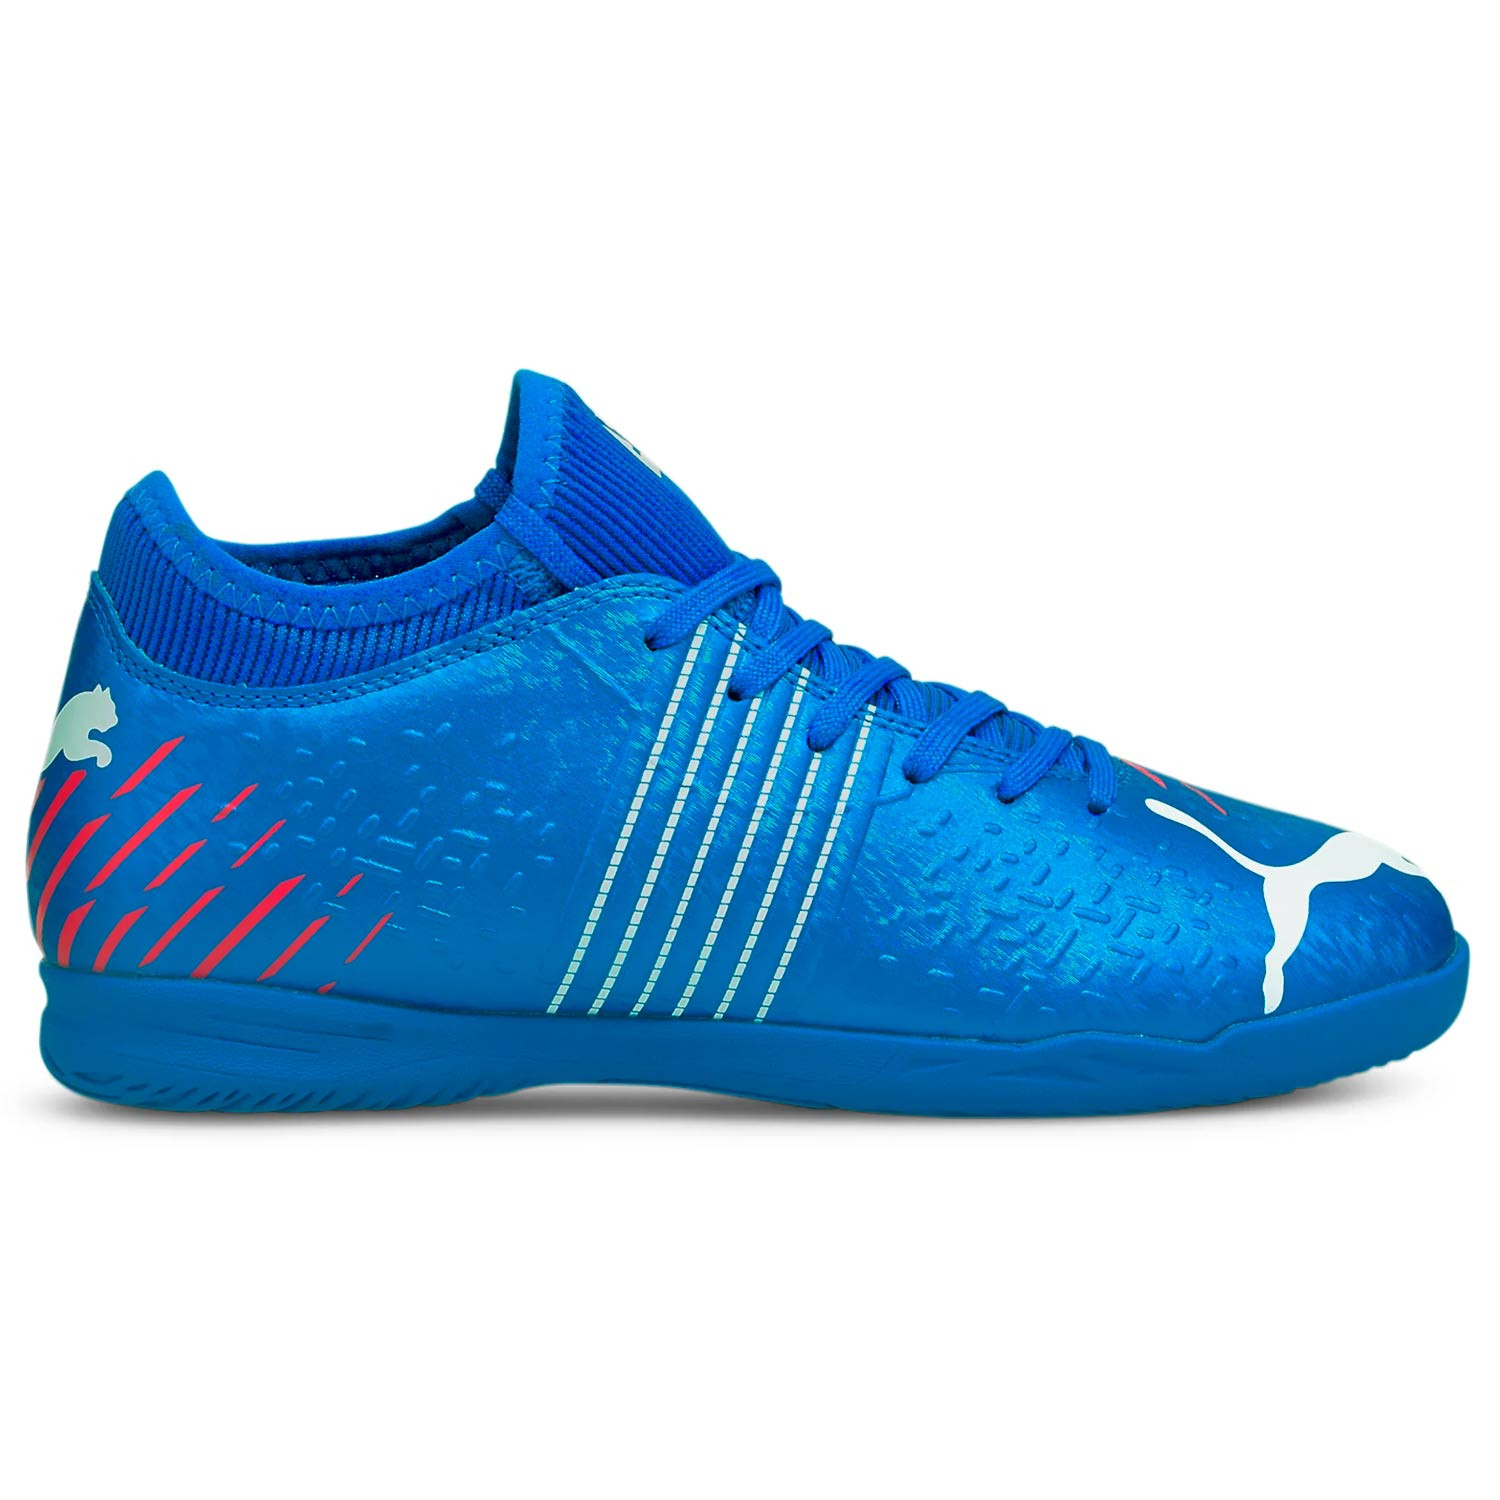 Zapatillas Future Z IT Jr azules | futbolmaniaKids